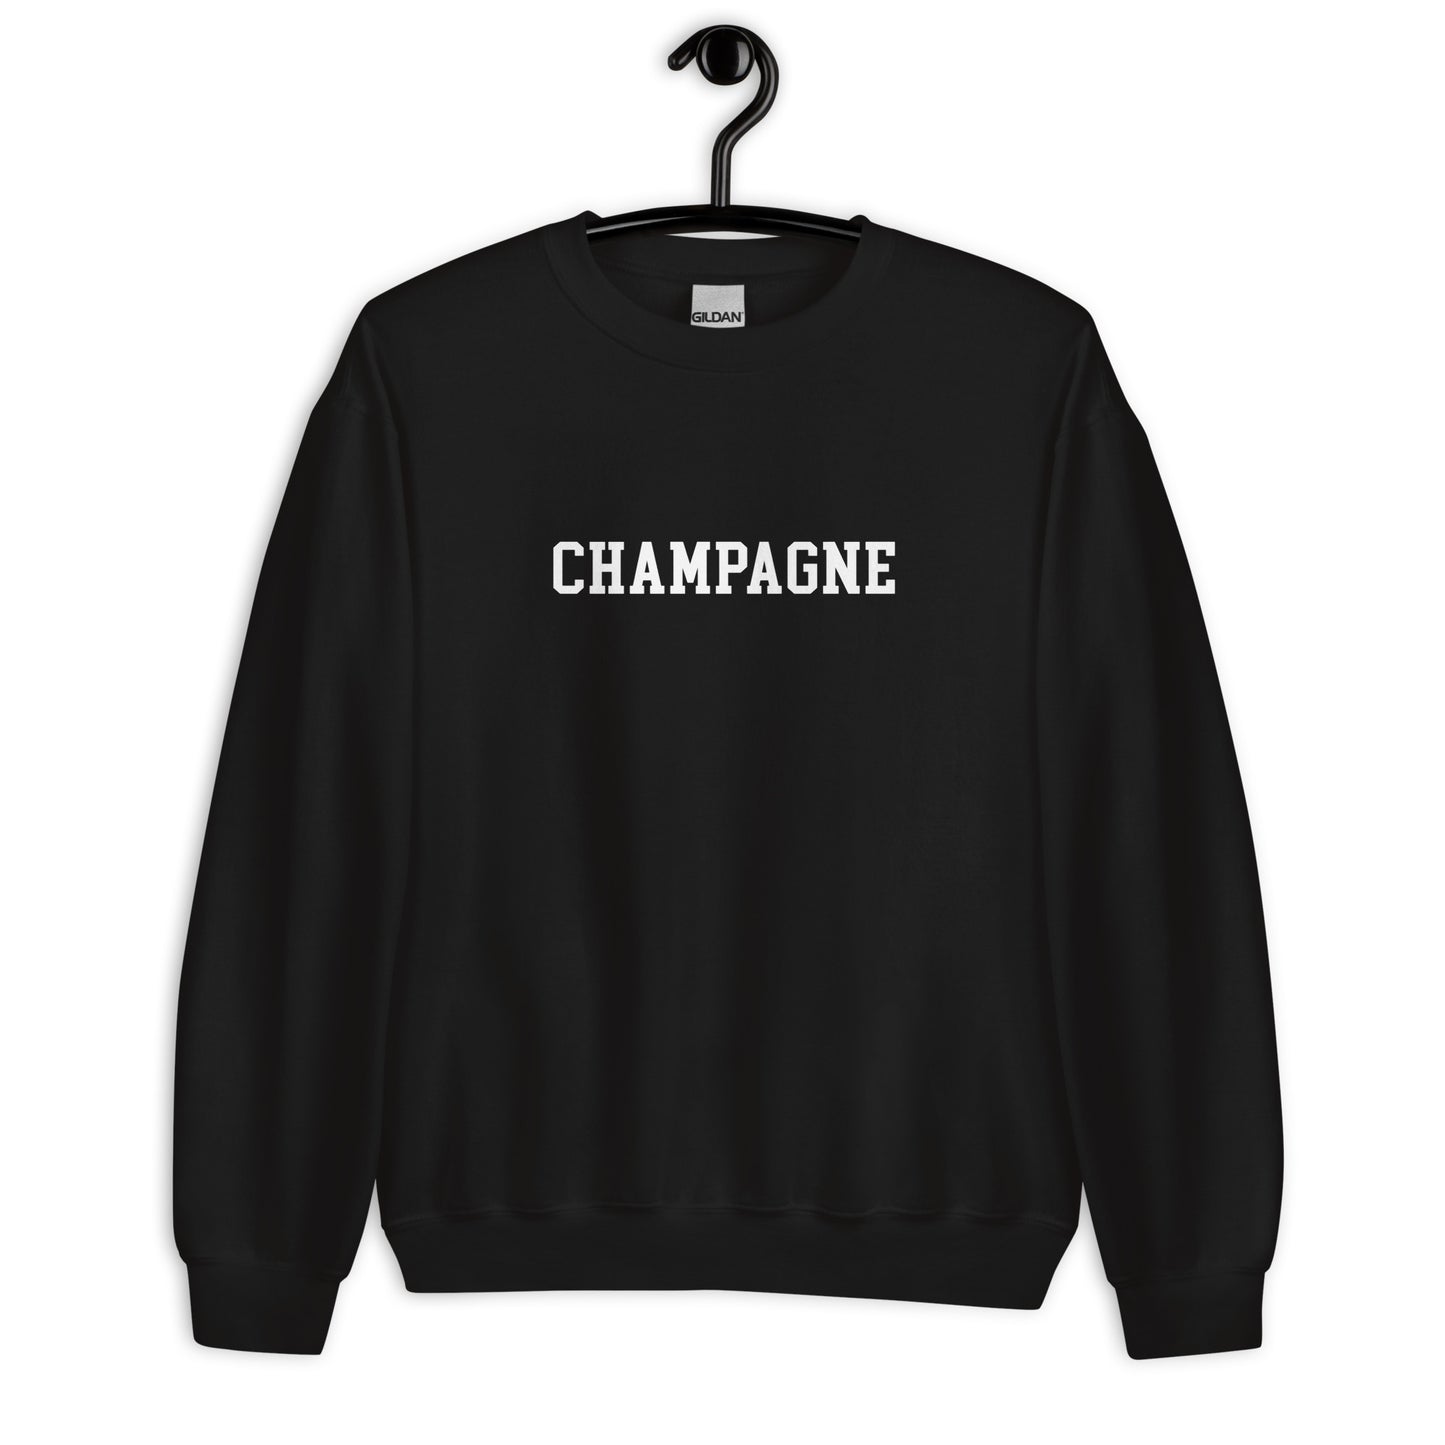 Champagne Sweatshirt - Arched Font